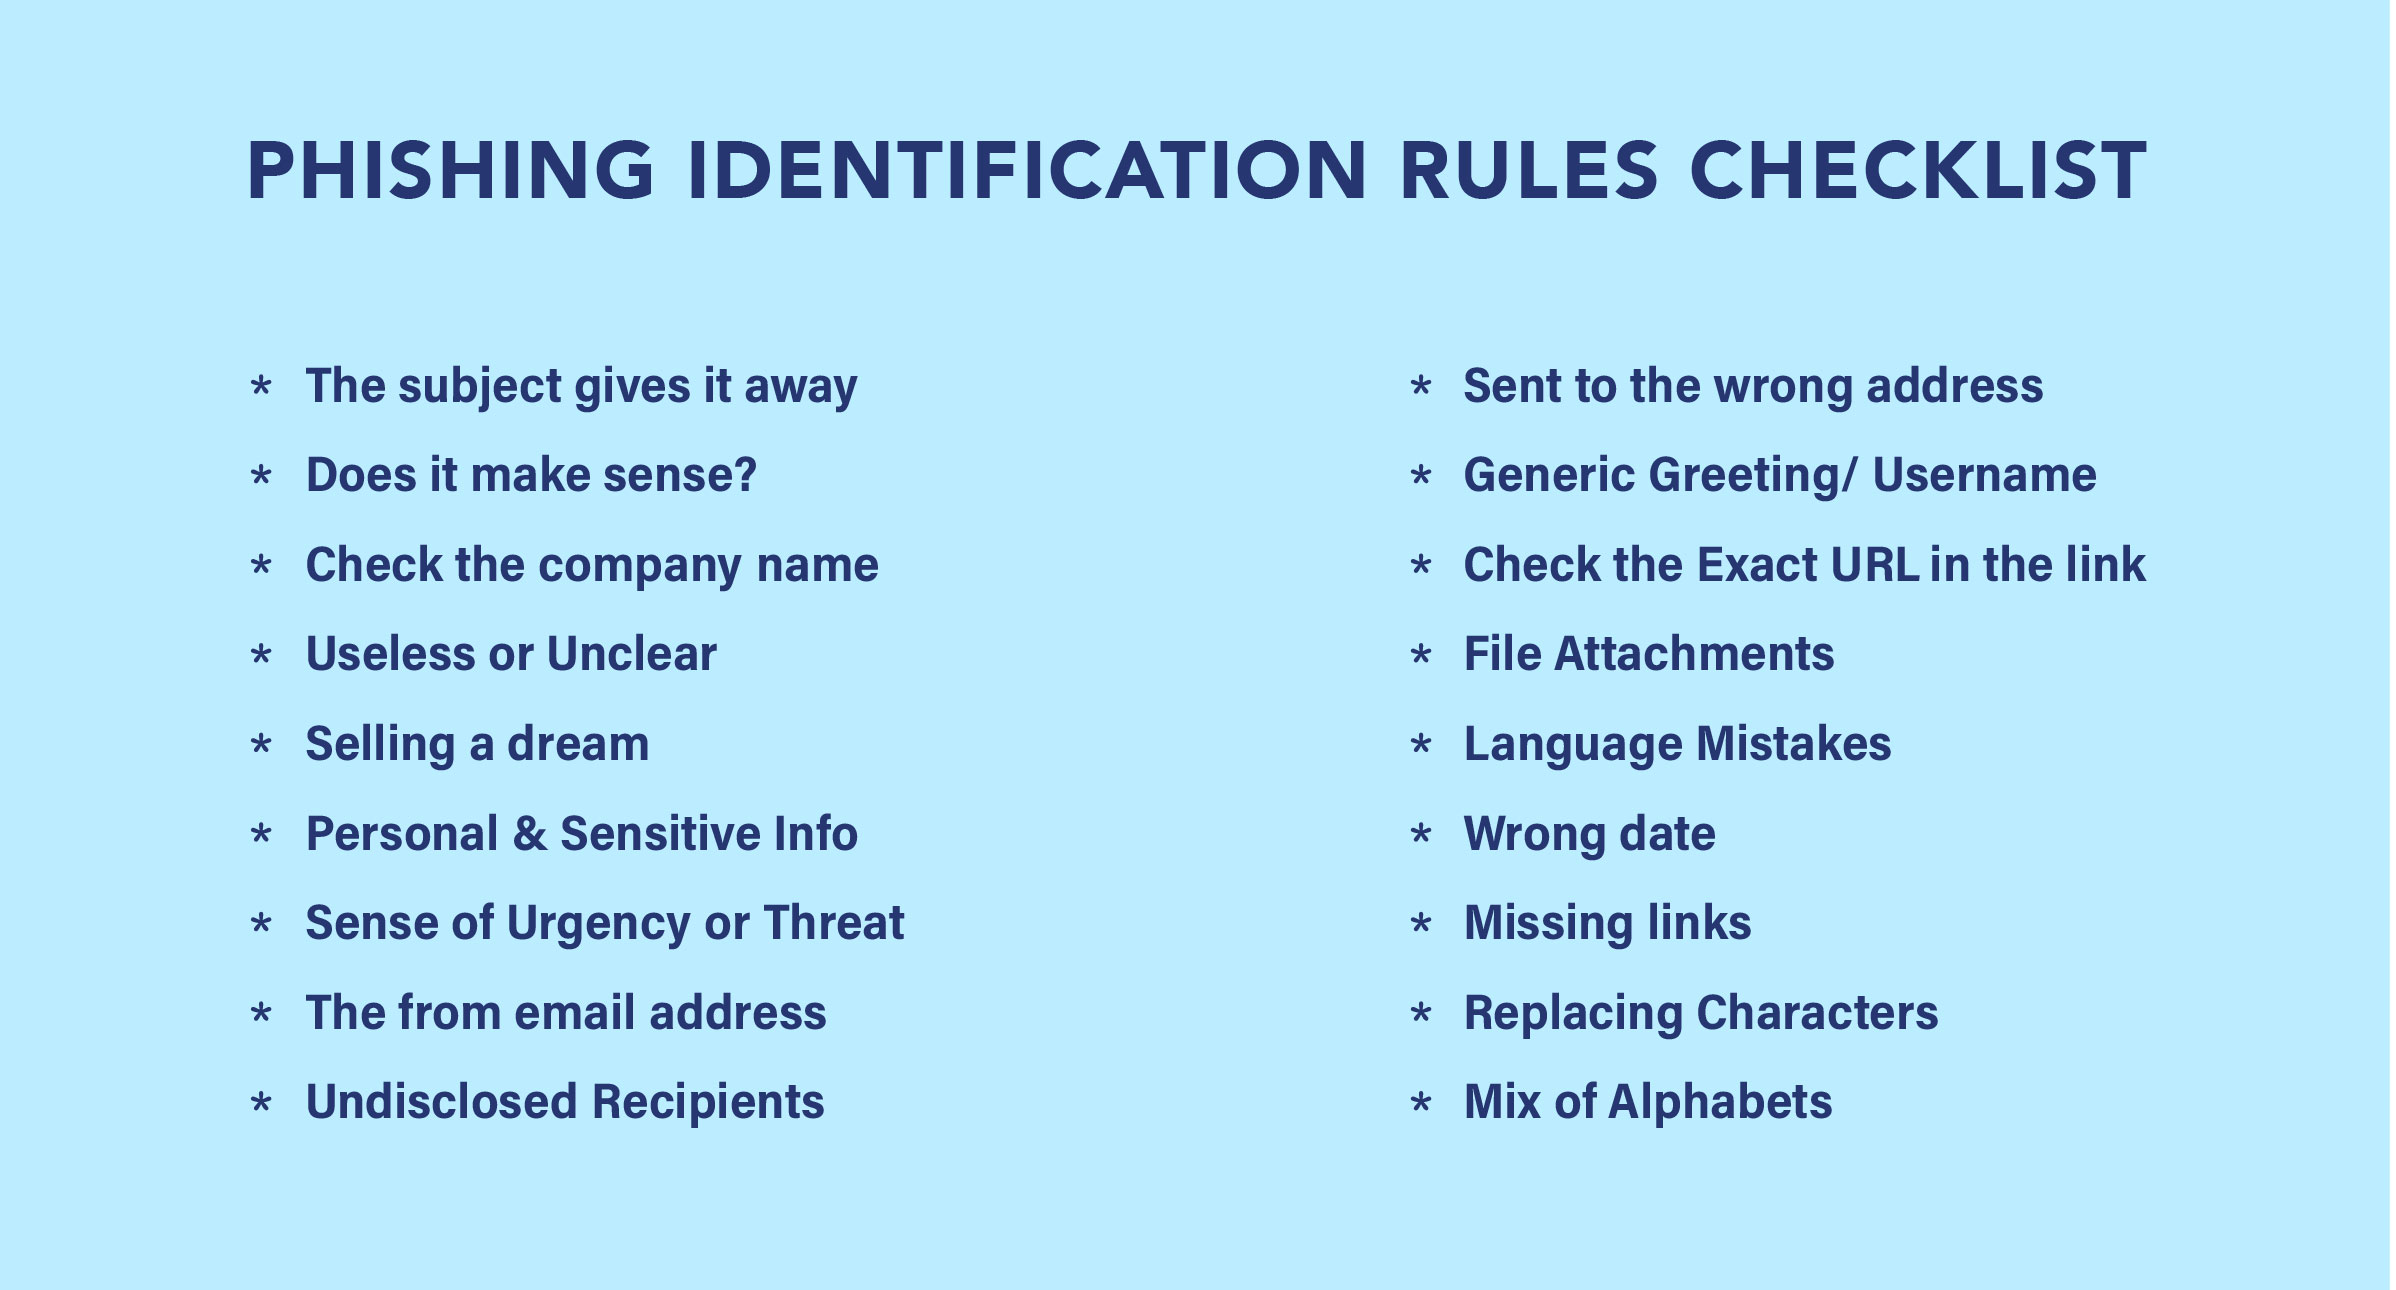 Phishing identification rules checklist